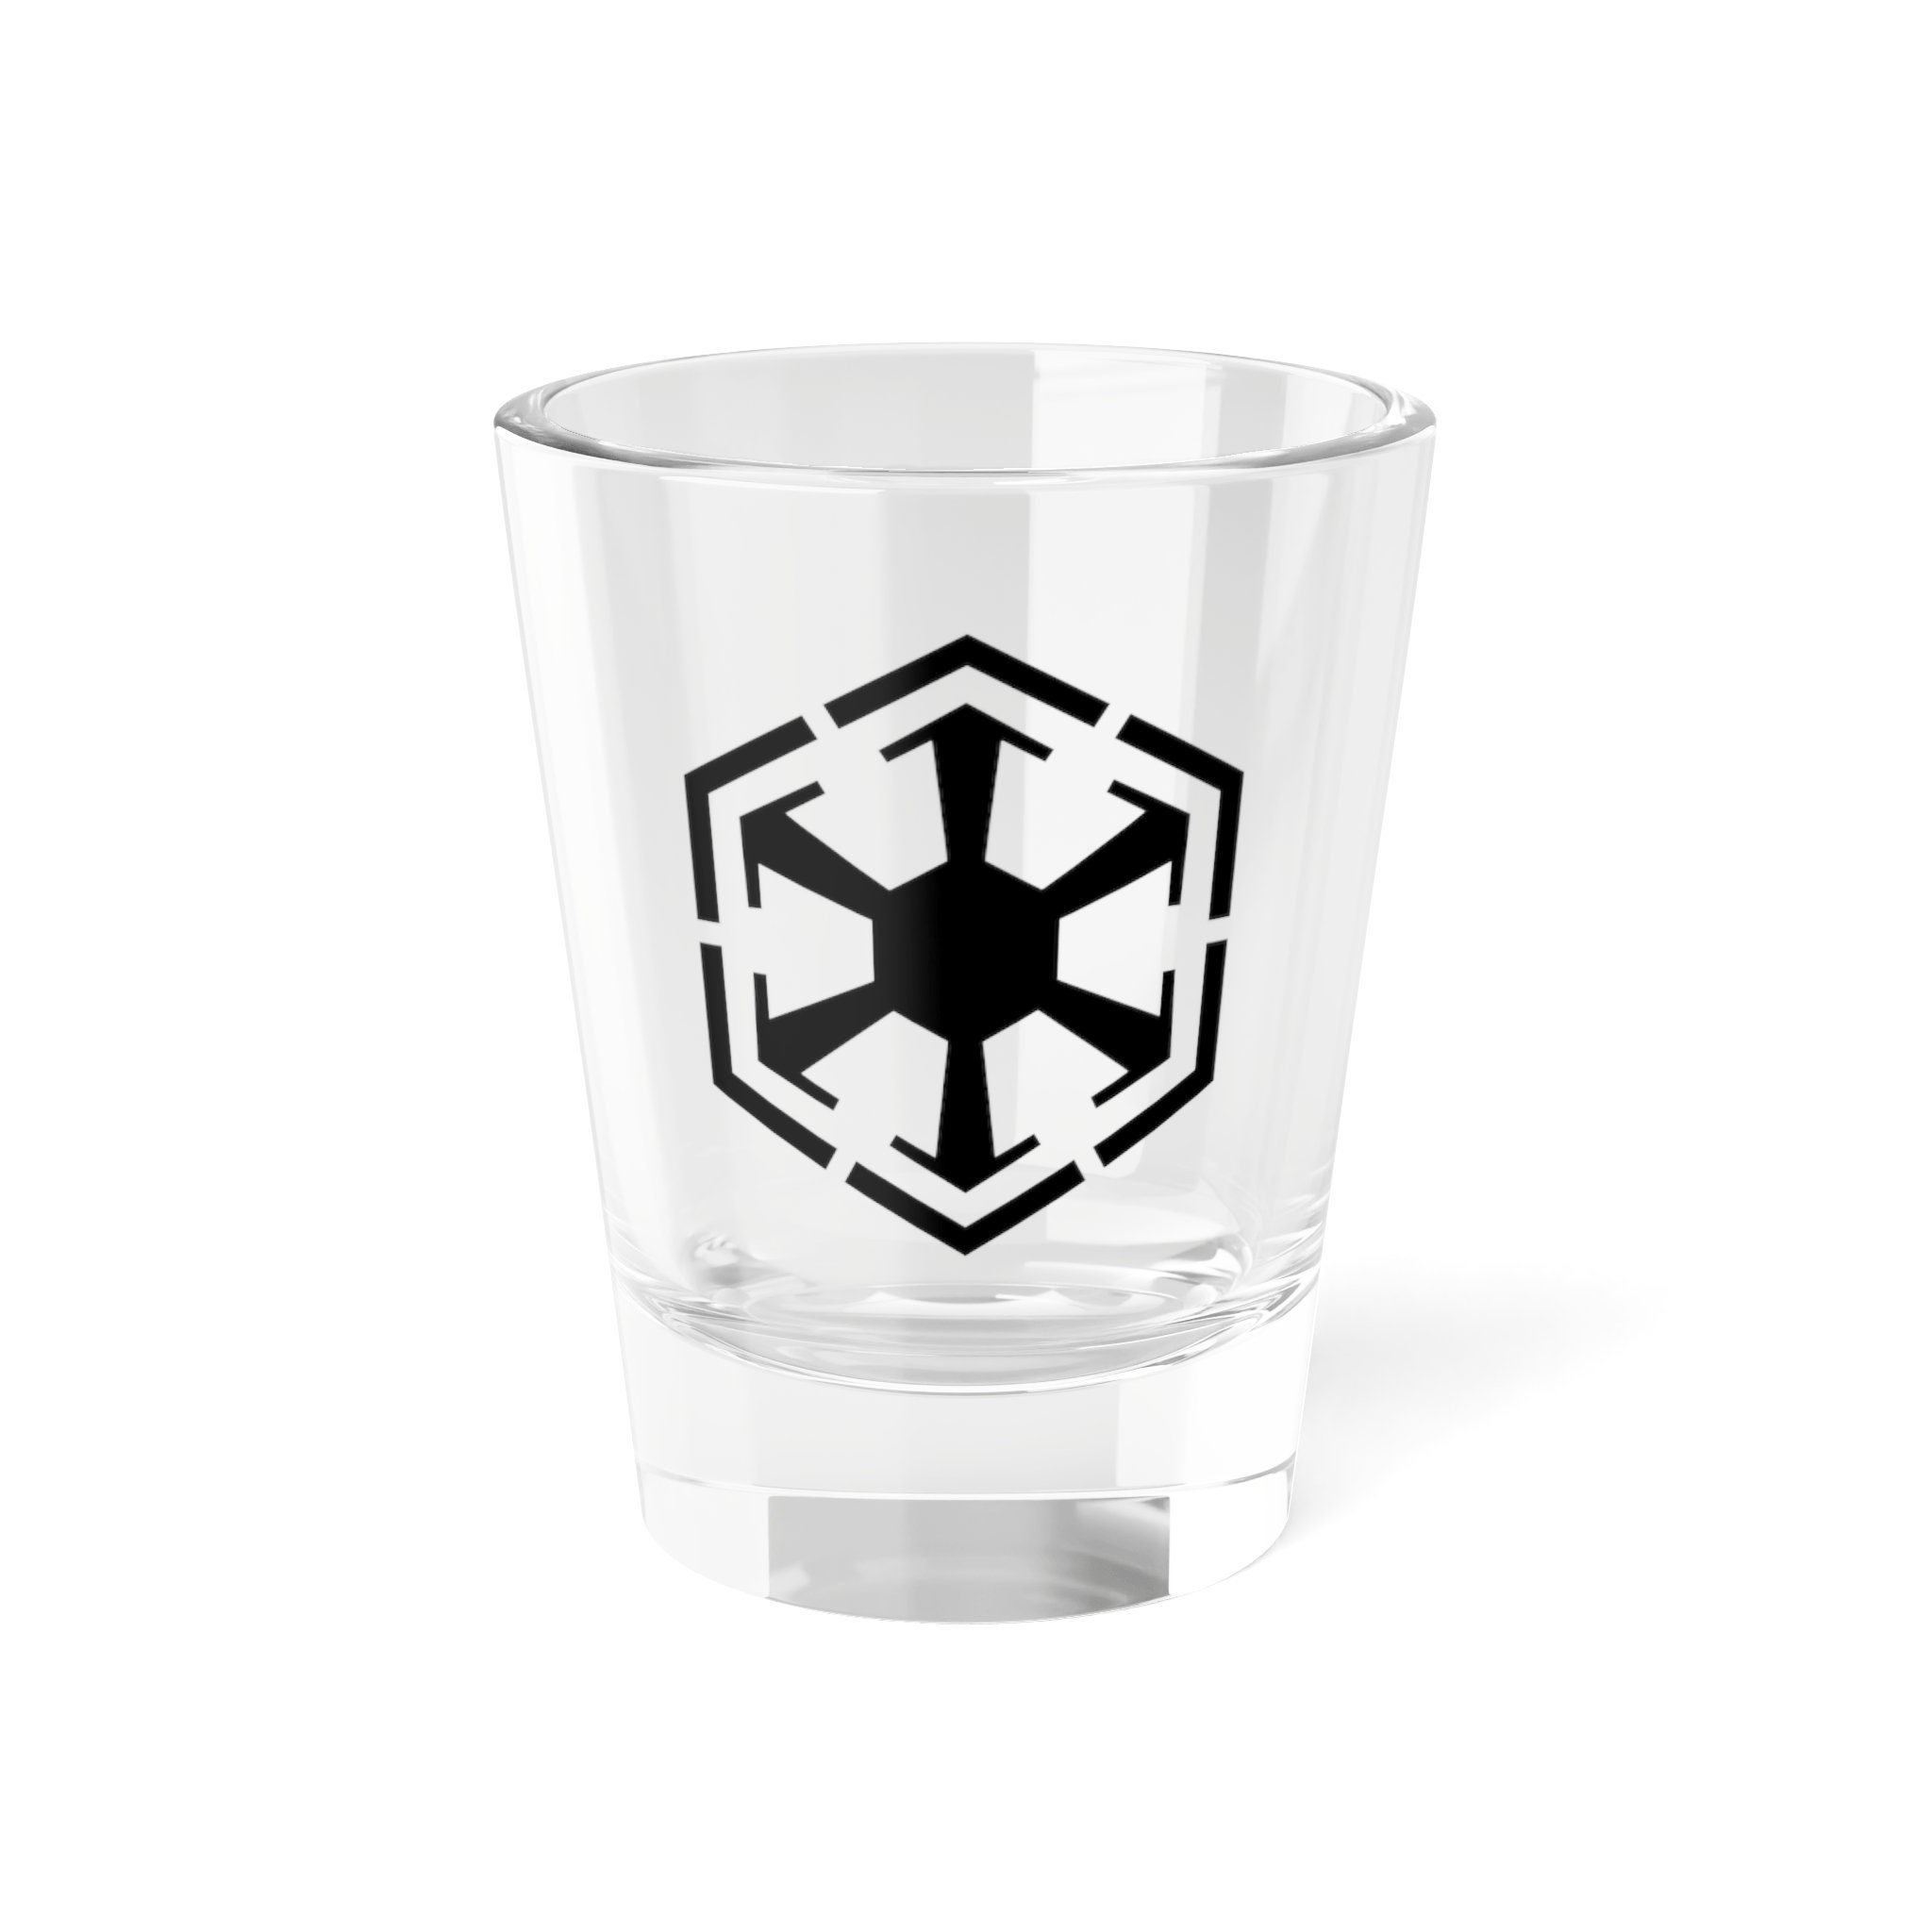 ArtStation - Star Wars shot glass